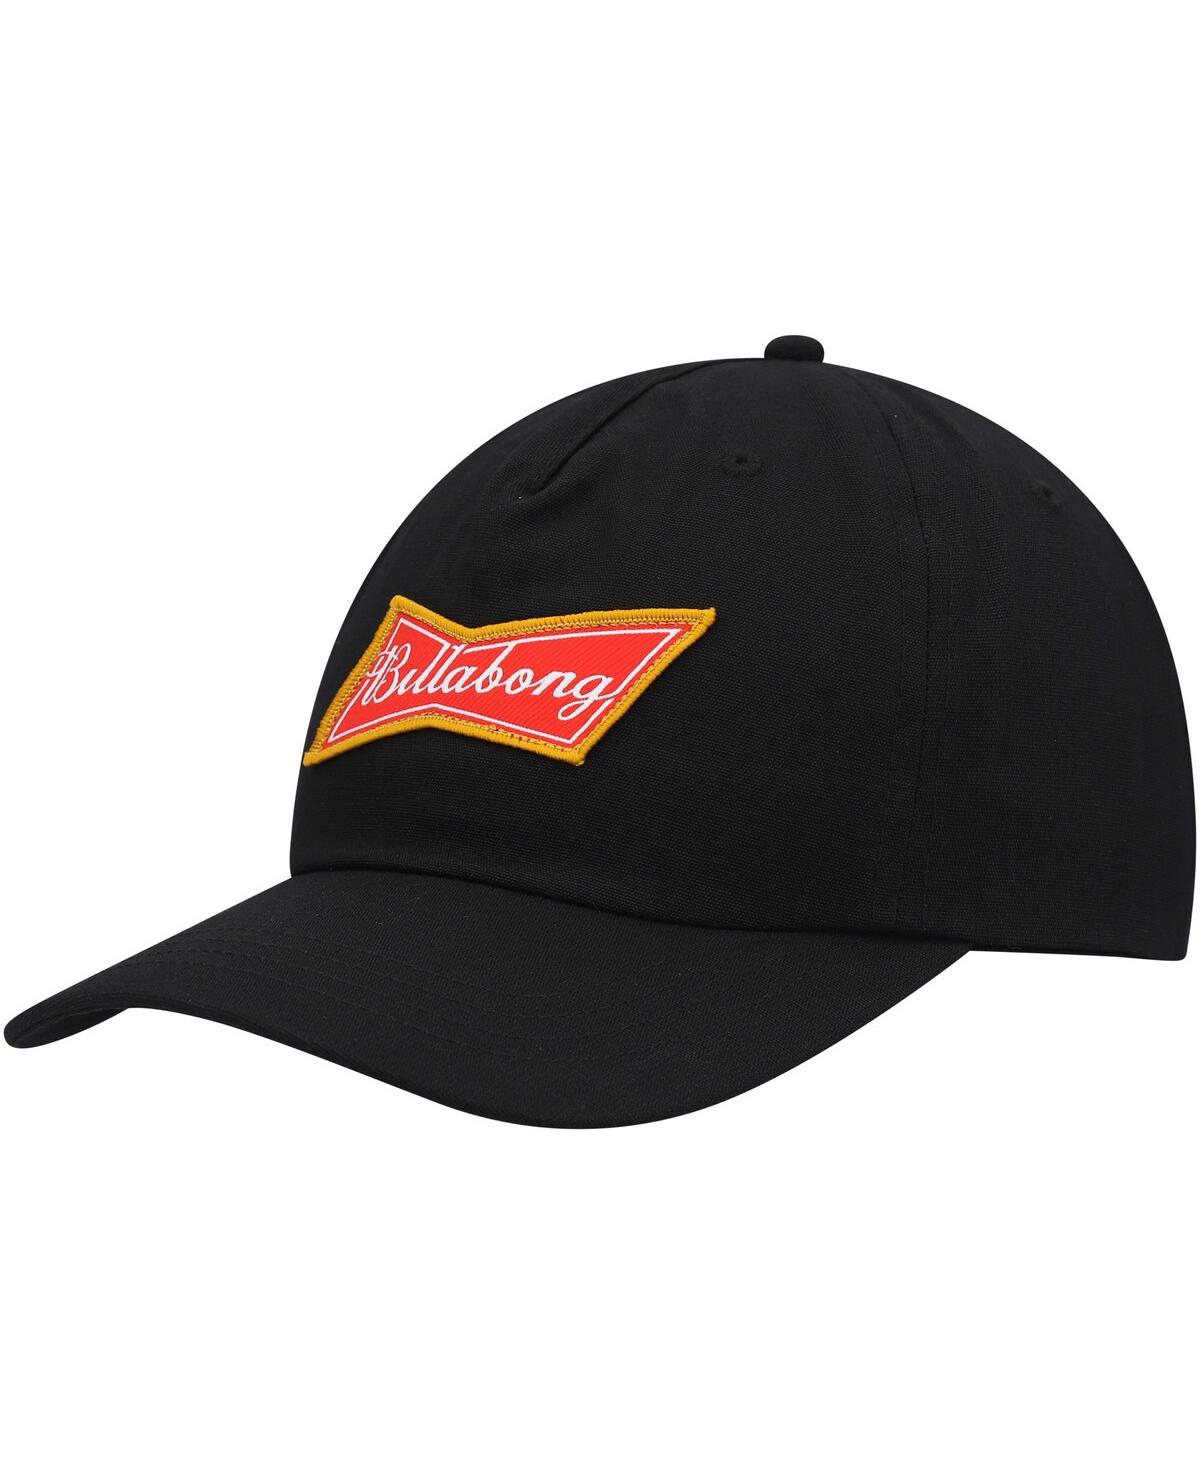 Men's x Budweiser Black Bow Snapback Hat - Black